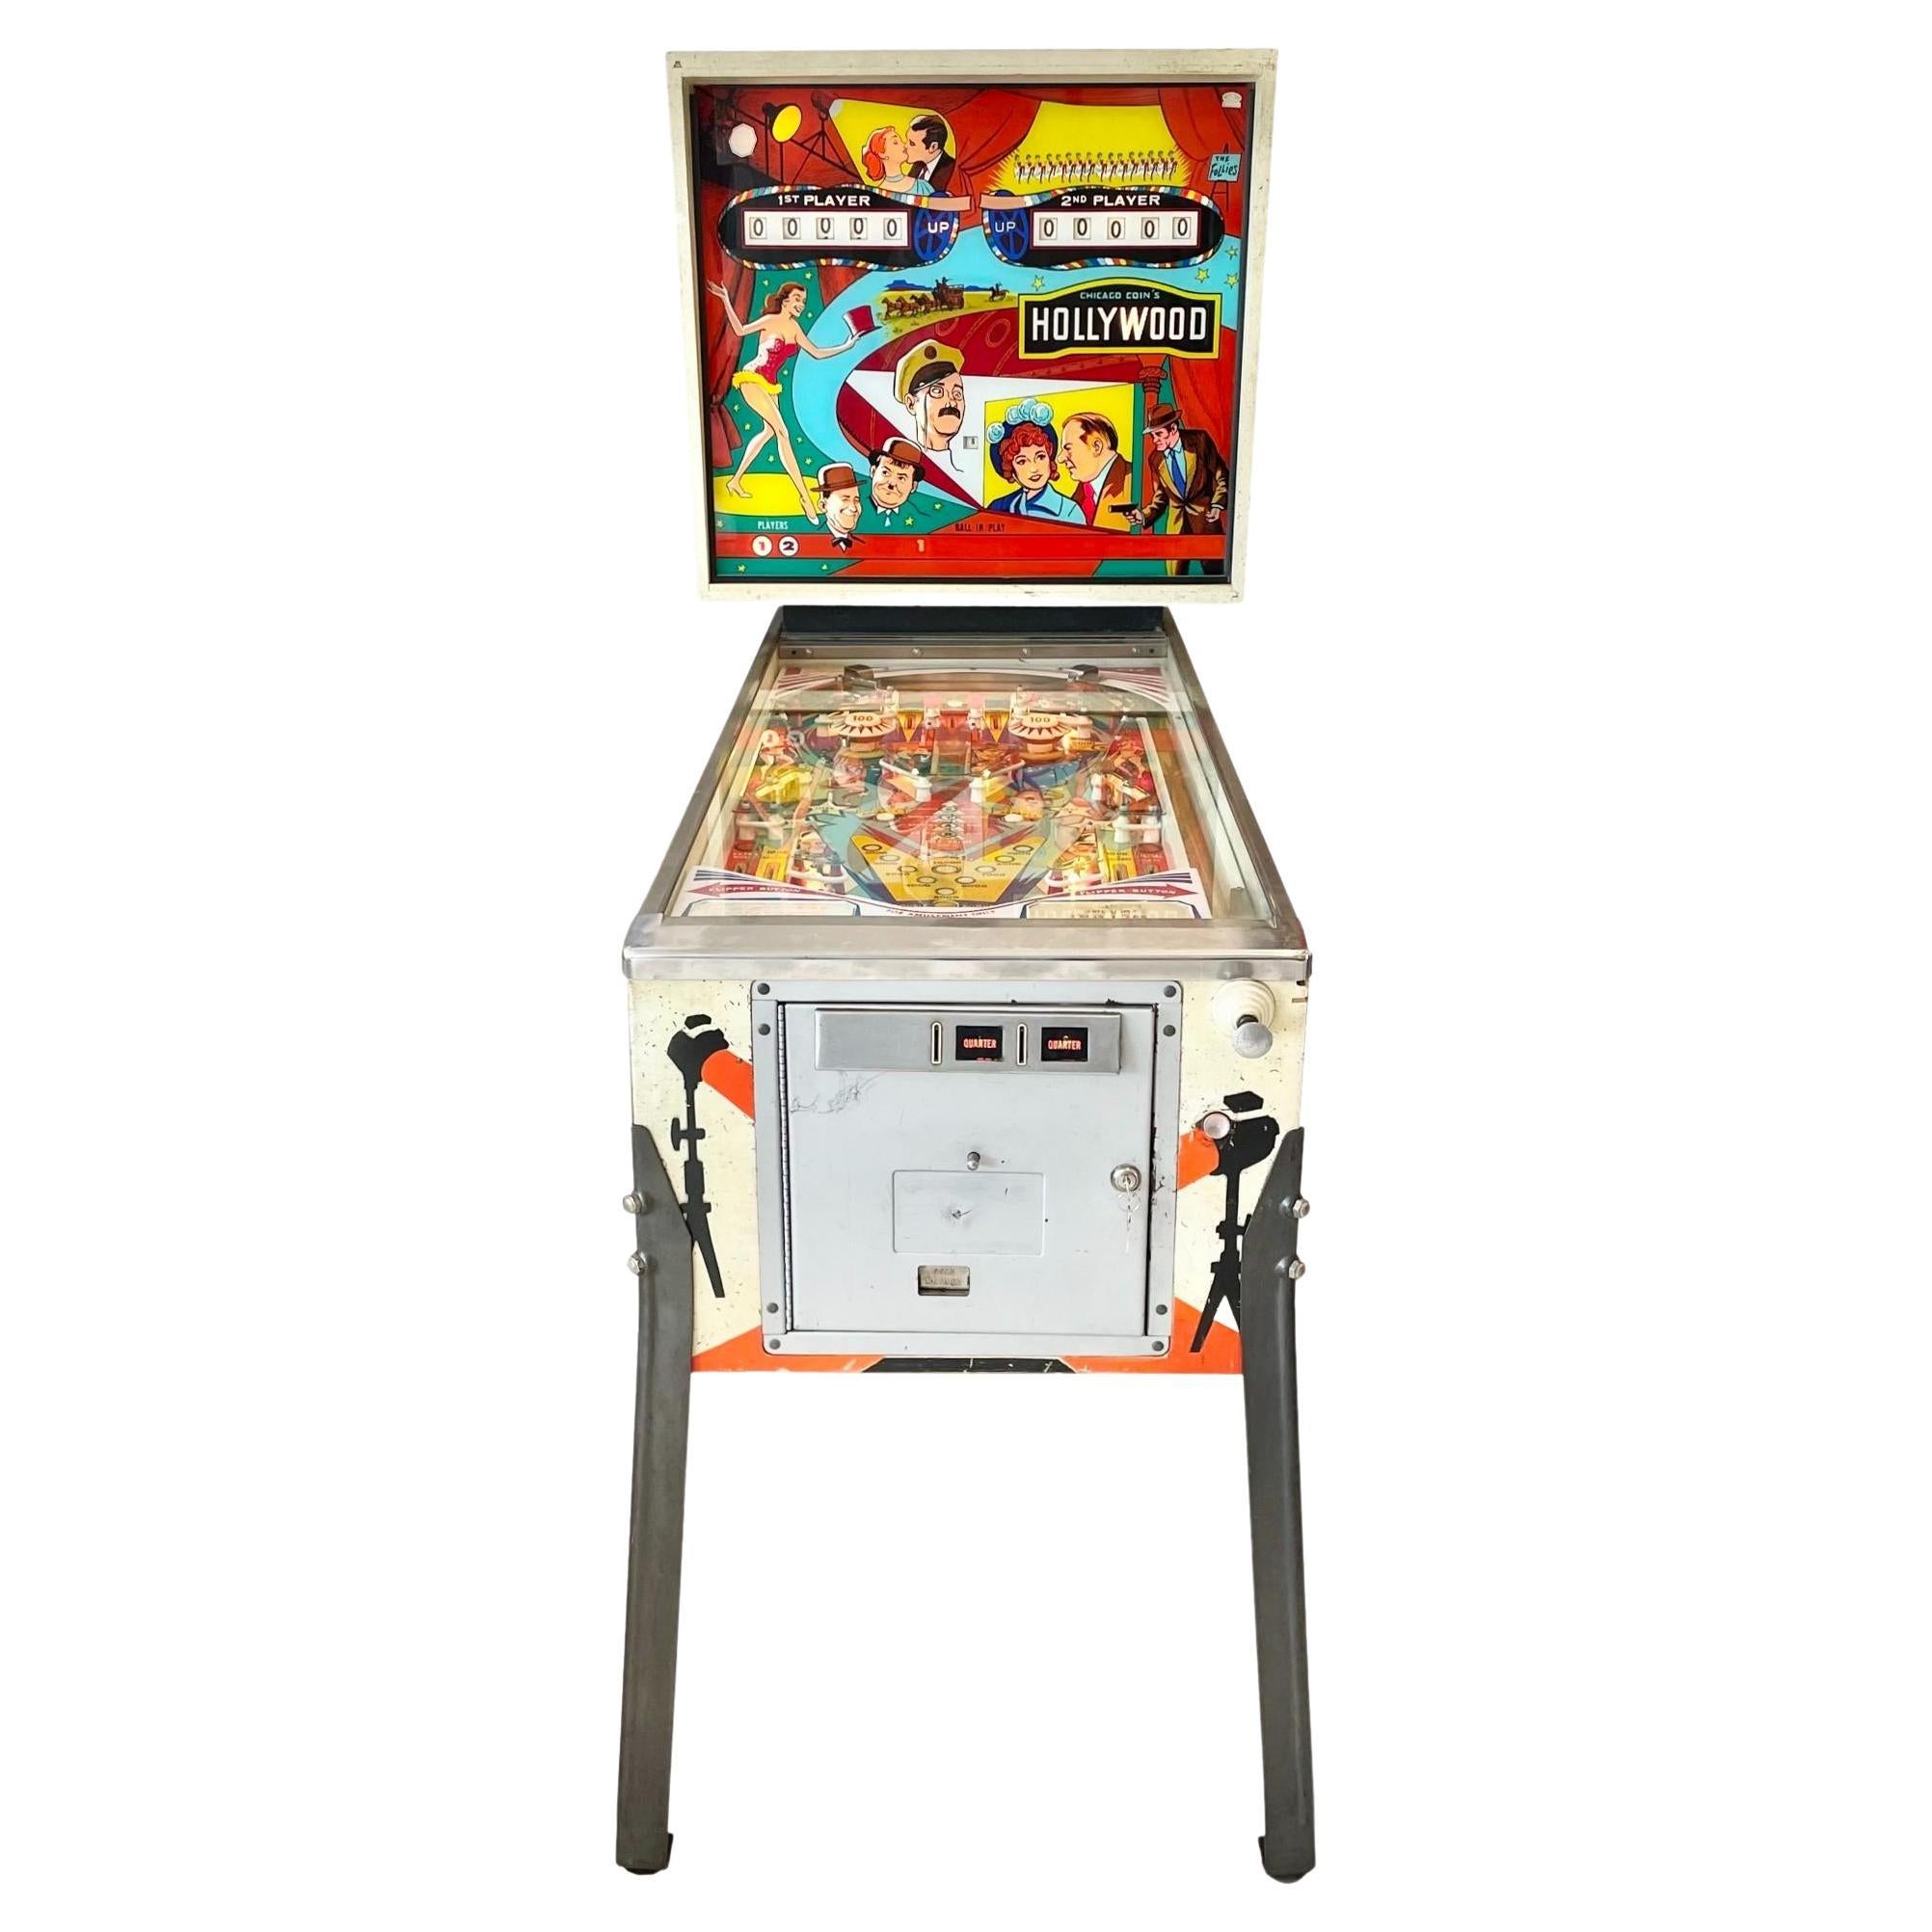 Hollywood Pinball-Arcade-Spiel, 1976, USA